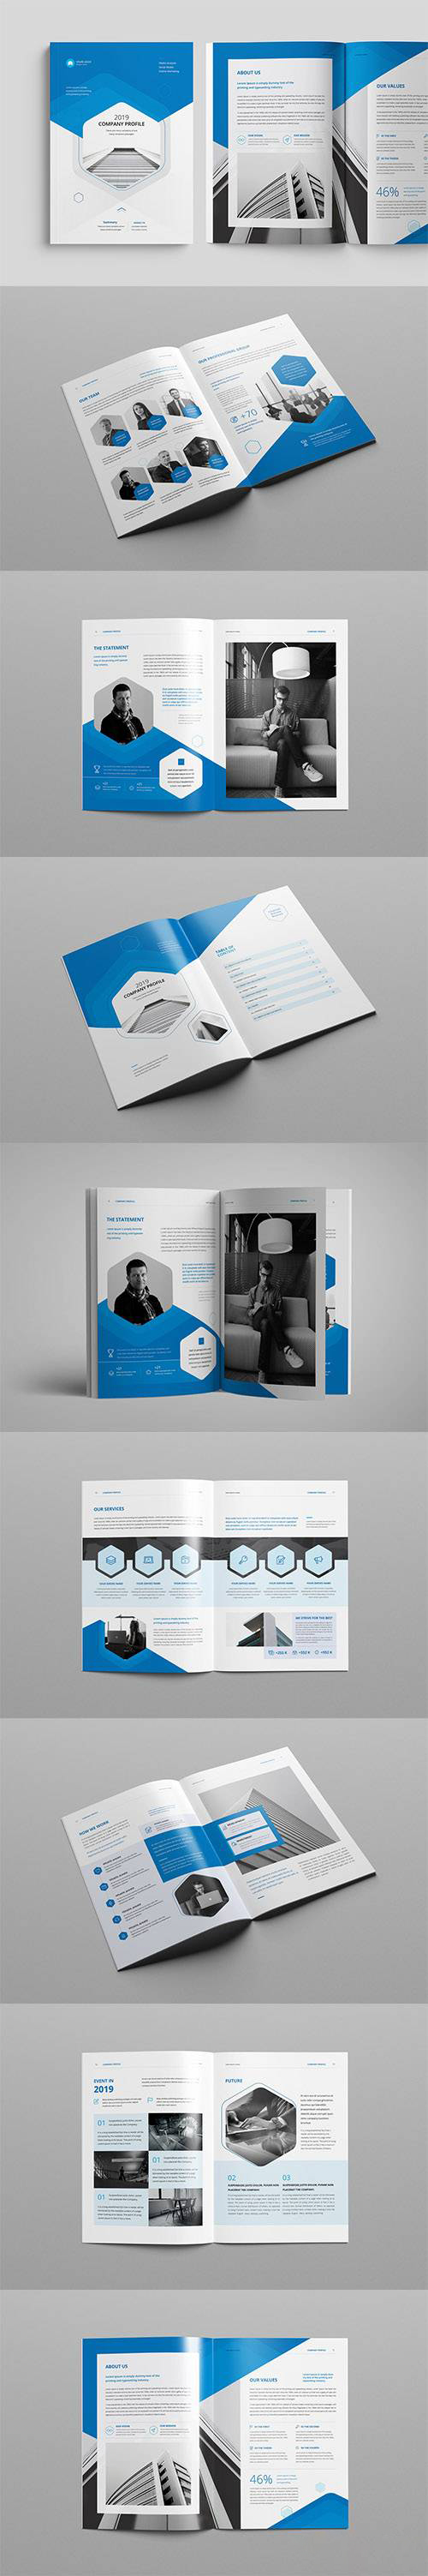 时尚简约的蓝色企业介绍画册模板 Stylish Minimalist Blue Corporate Brochure Template插图